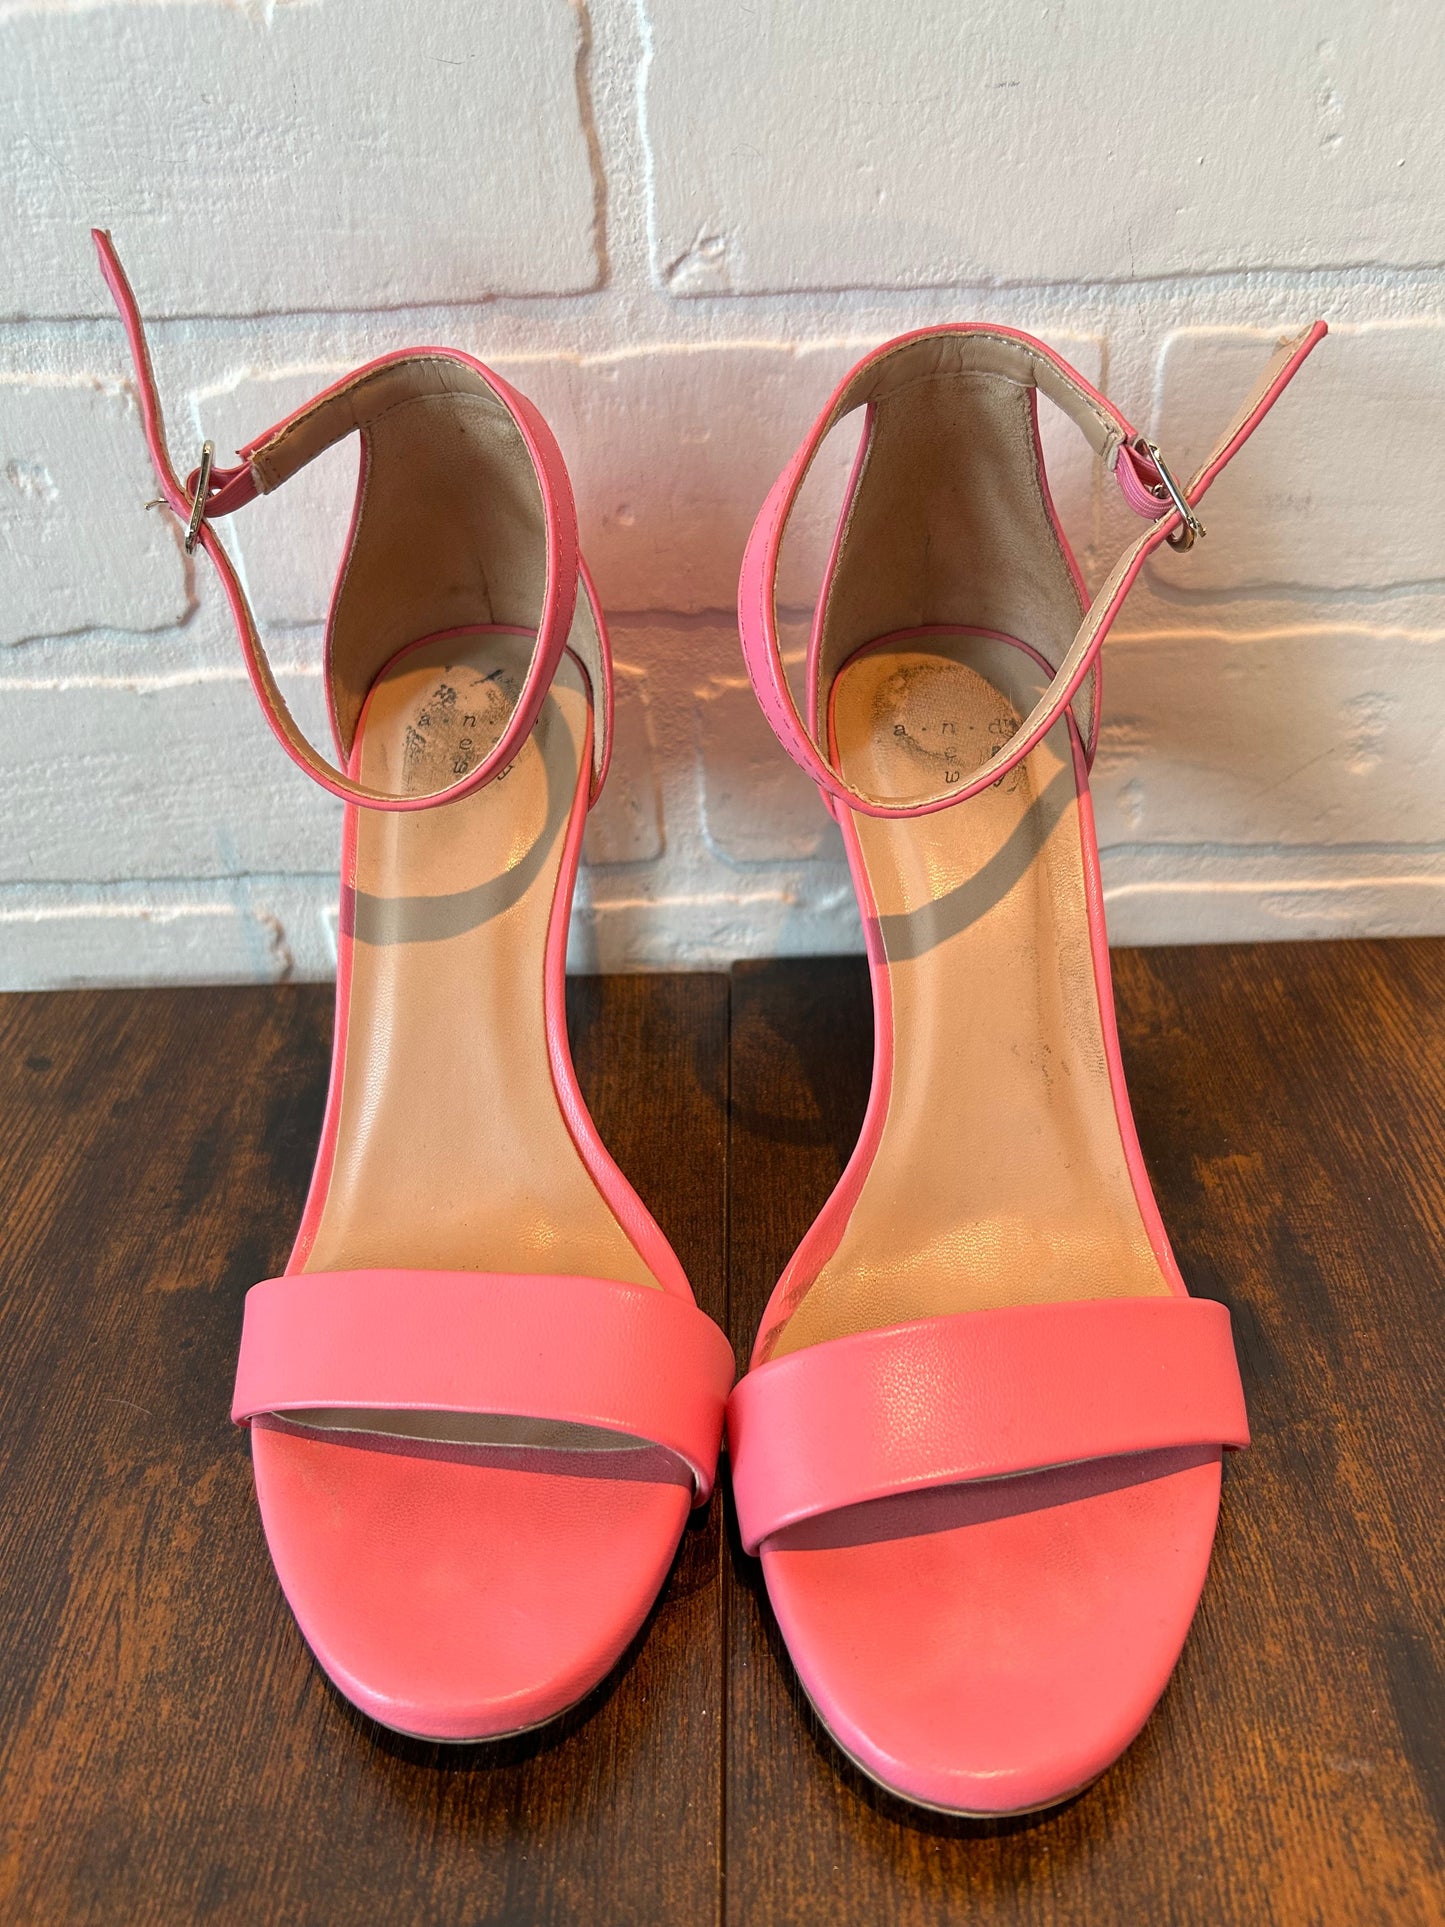 Pink Sandals Heels Stiletto Vince Camuto, Size 6